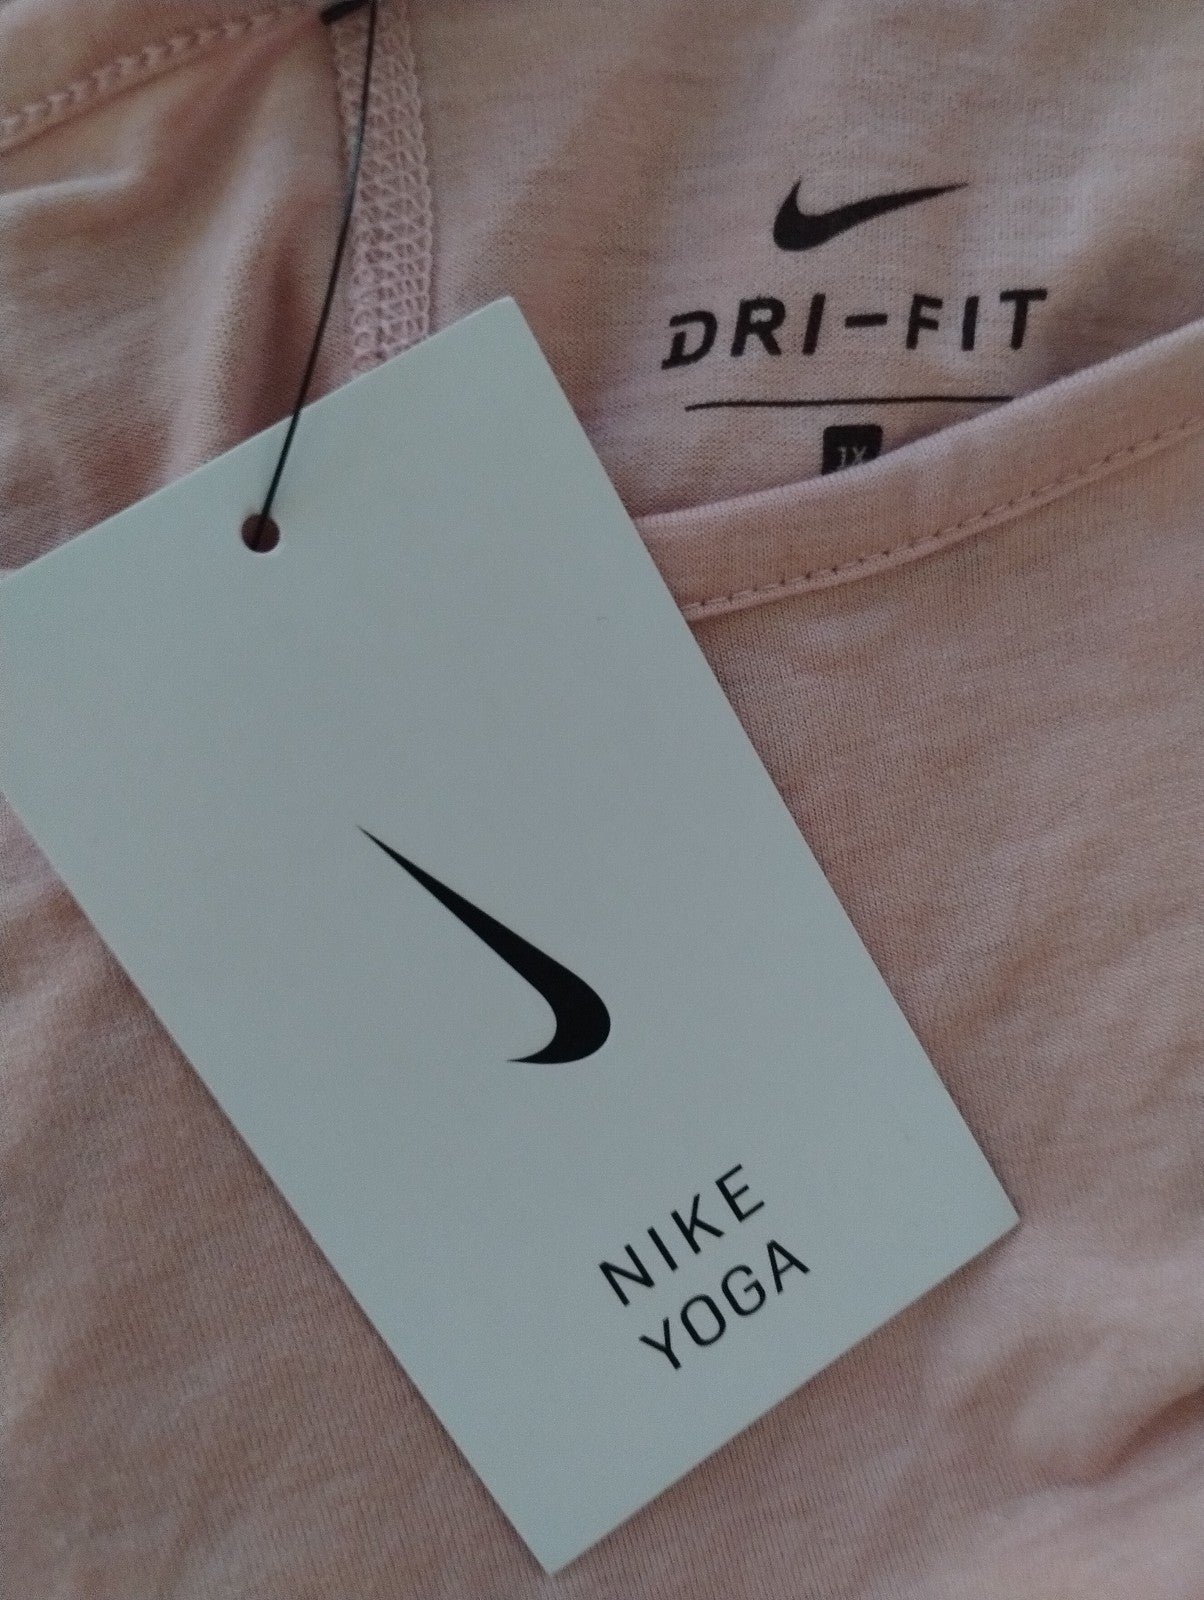 Wholesale price Nike Yoga Top Plus Size Short-Sleeve - Sizes 1X hokac6w2U well sale